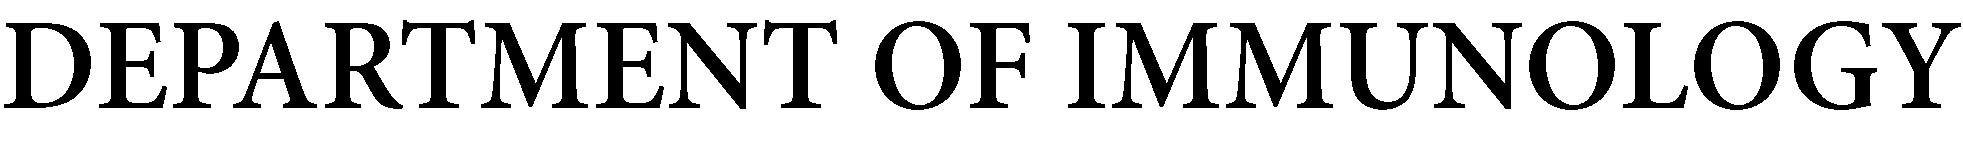 Dept Immunology logo